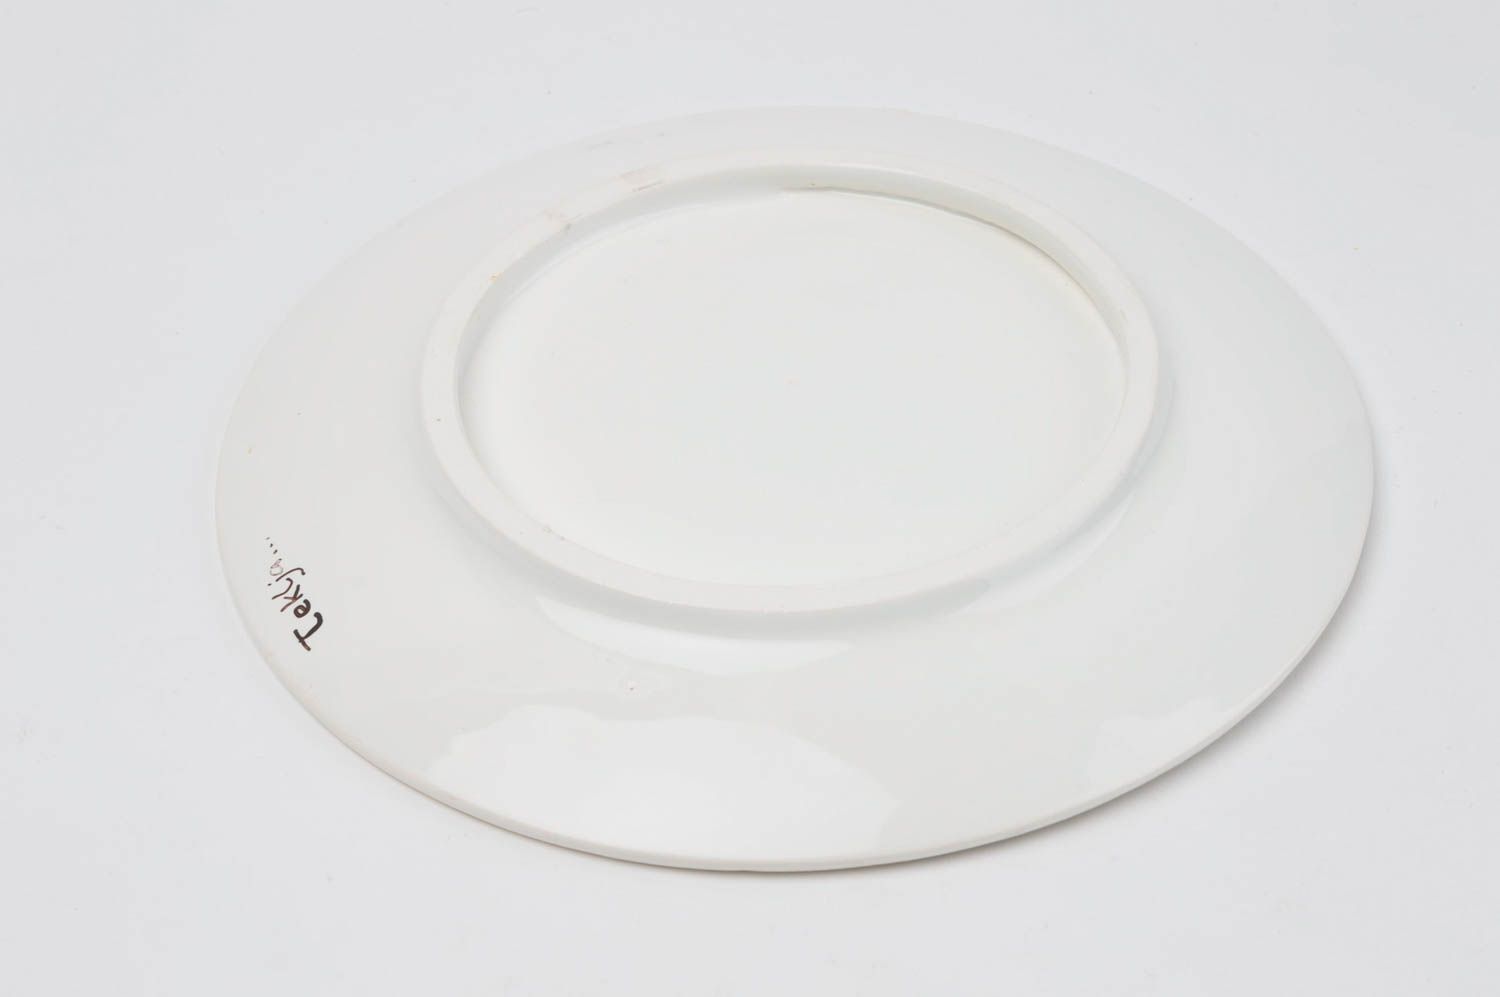 Handmade ceramic plated decorative porcelain tableware kitchen decor ideas photo 4